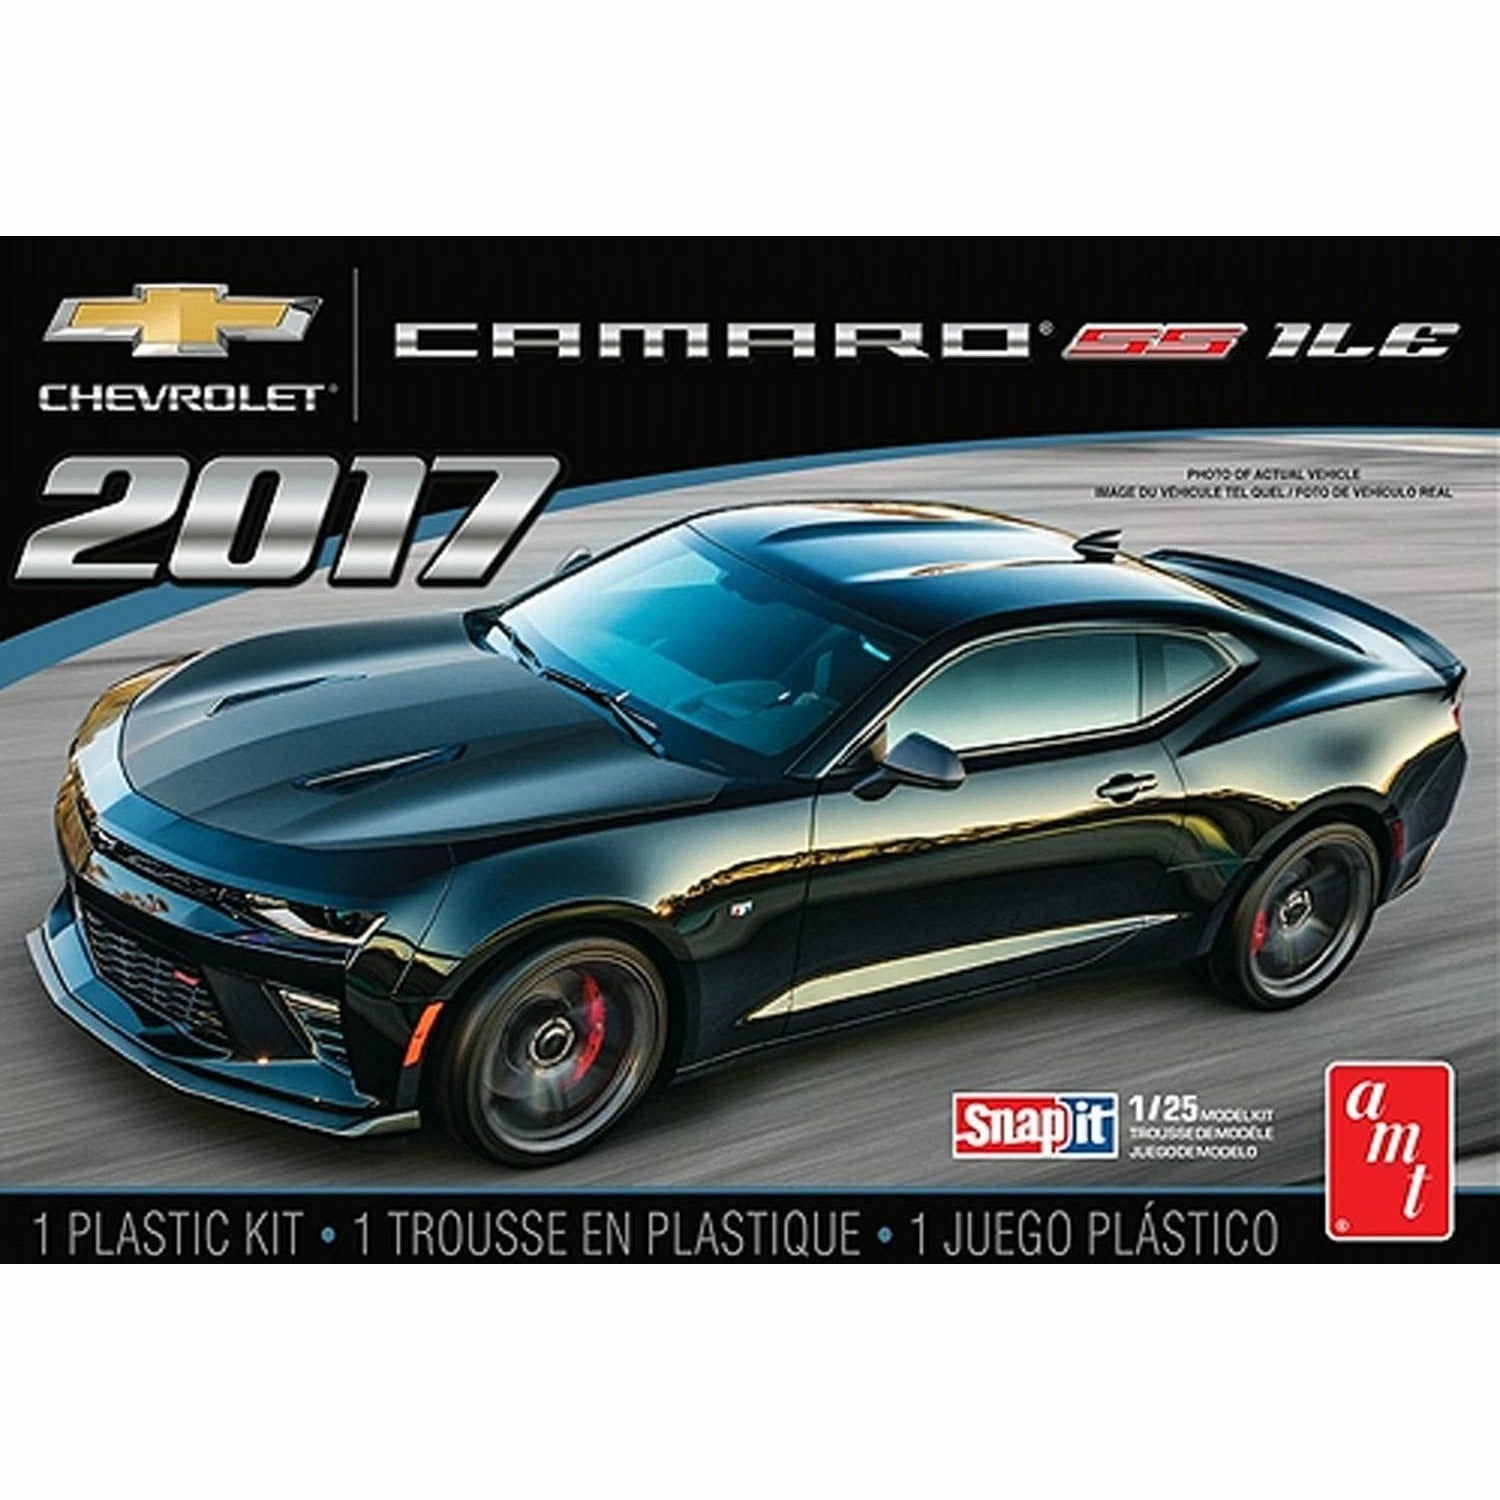 2017 Camaro 1/25 Model Car Kit #1035M by AMT